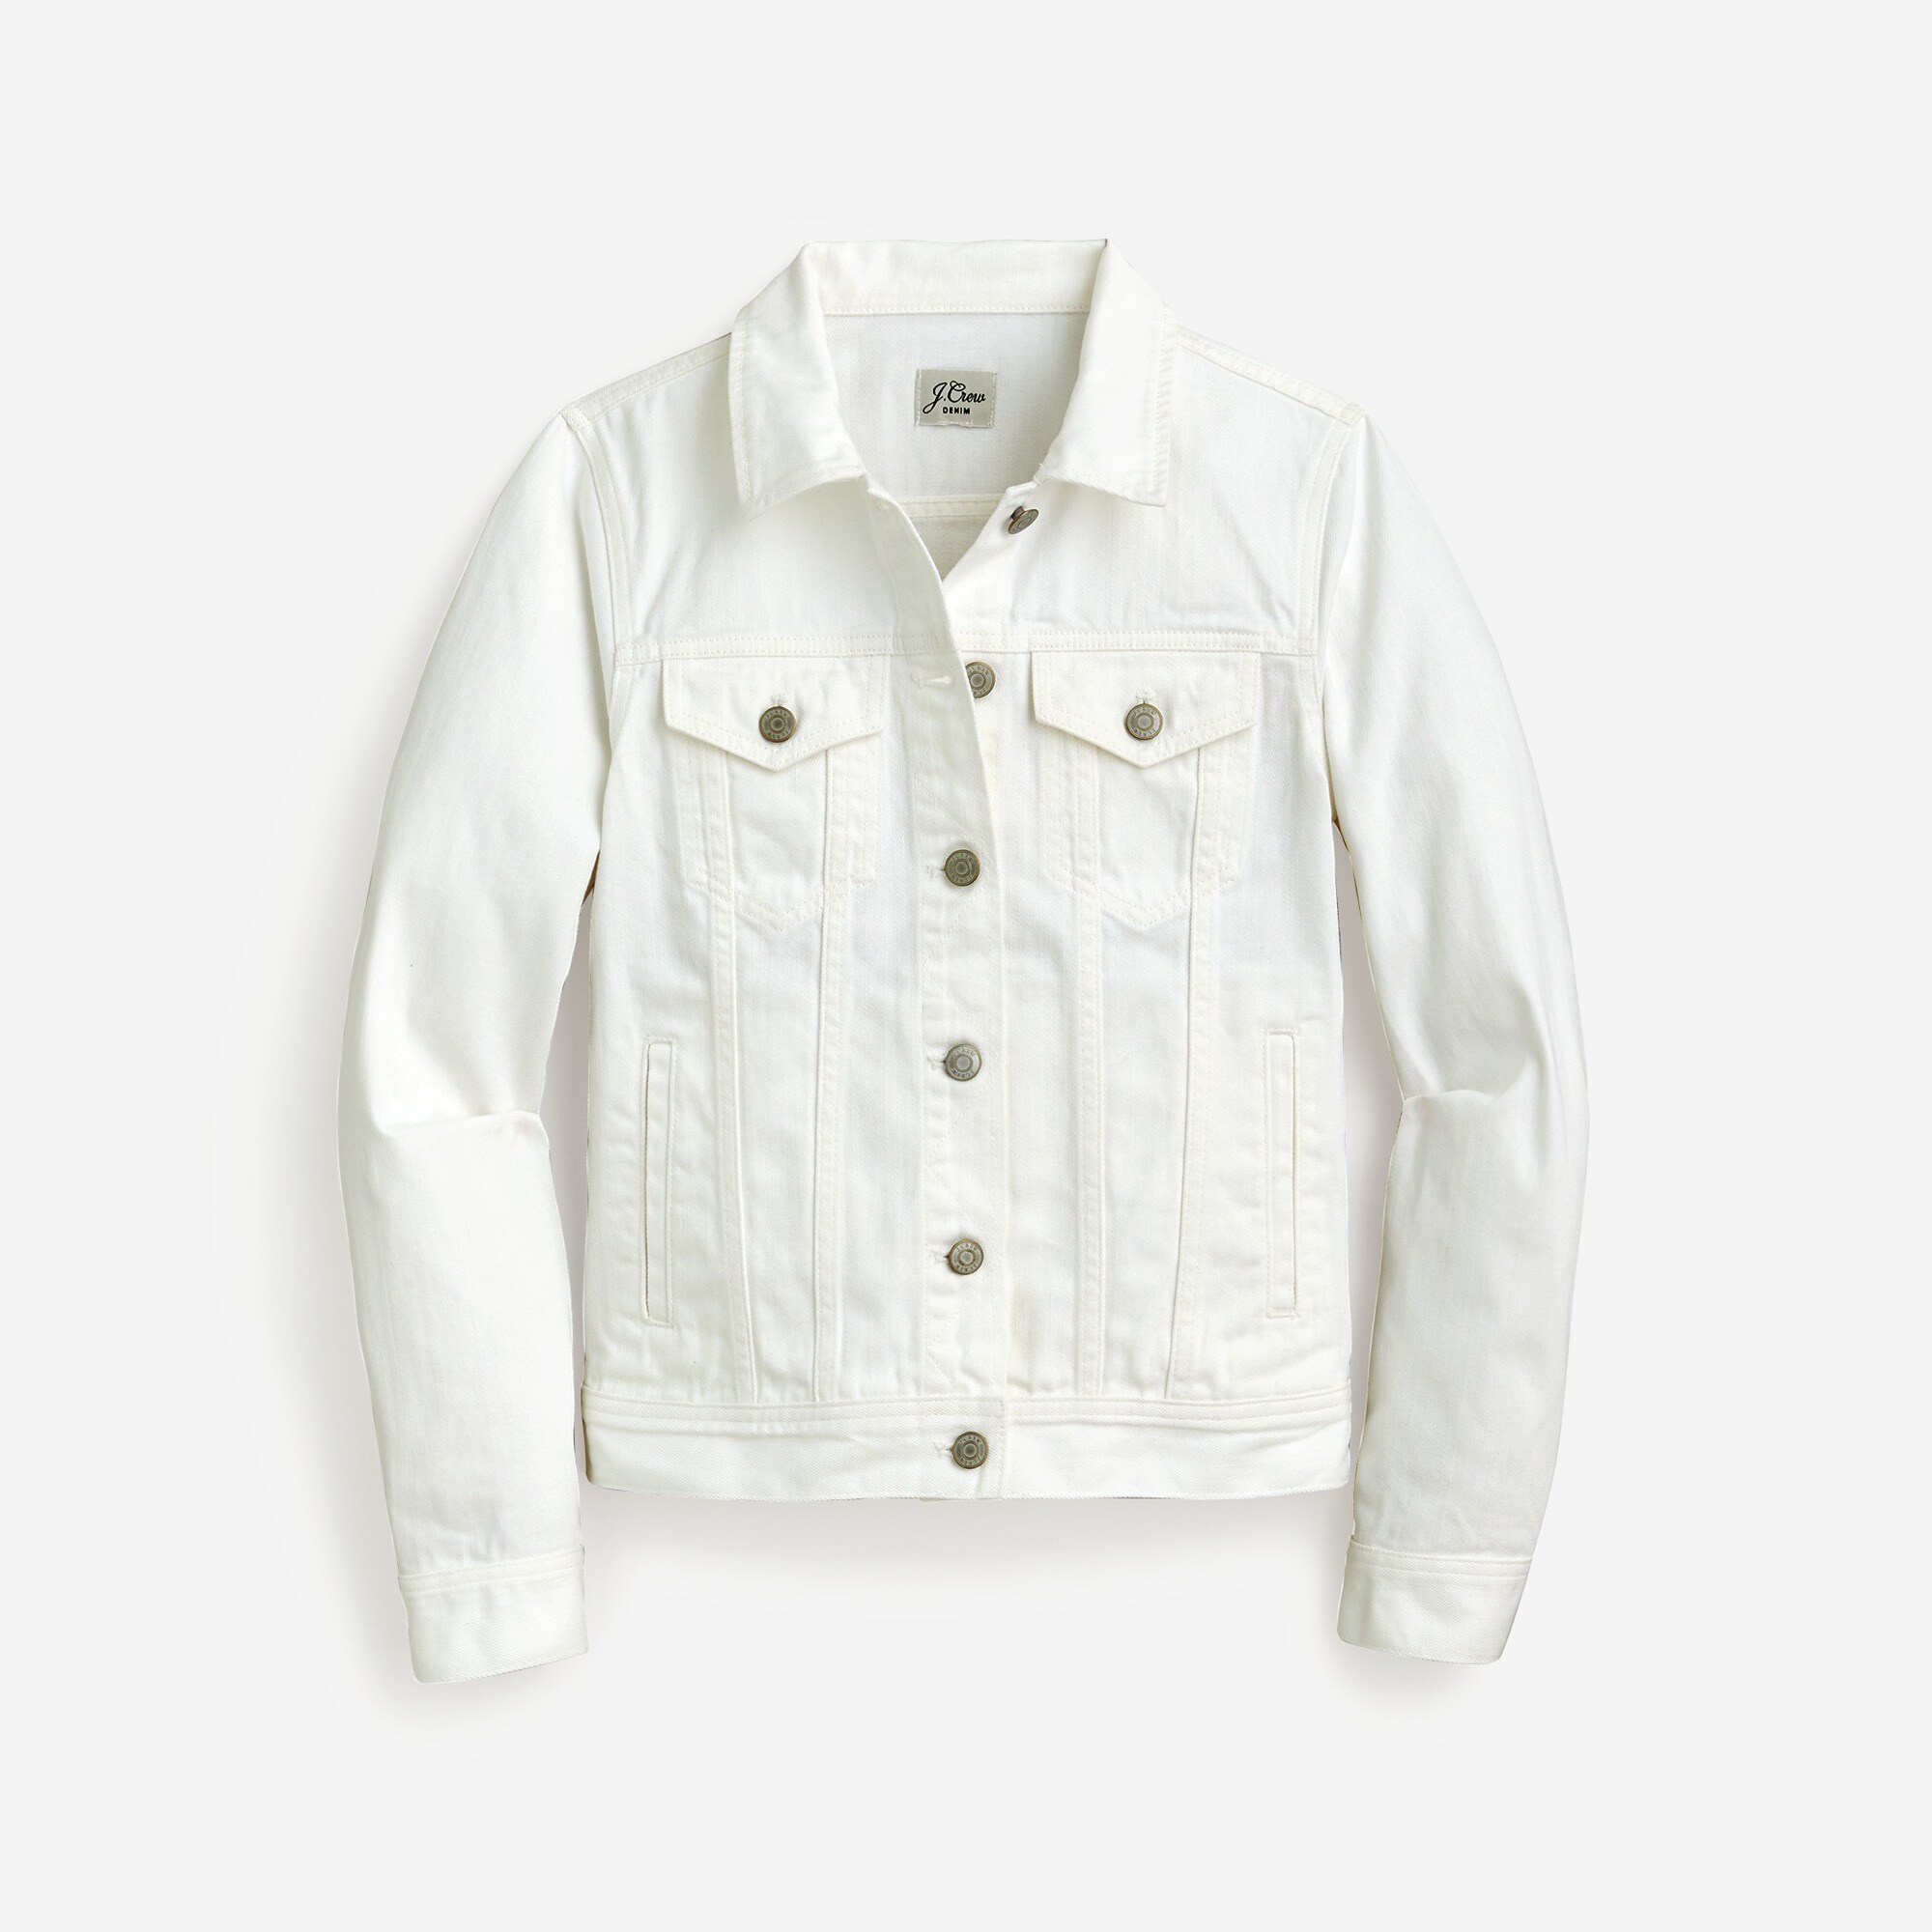  Classic denim jacket in white